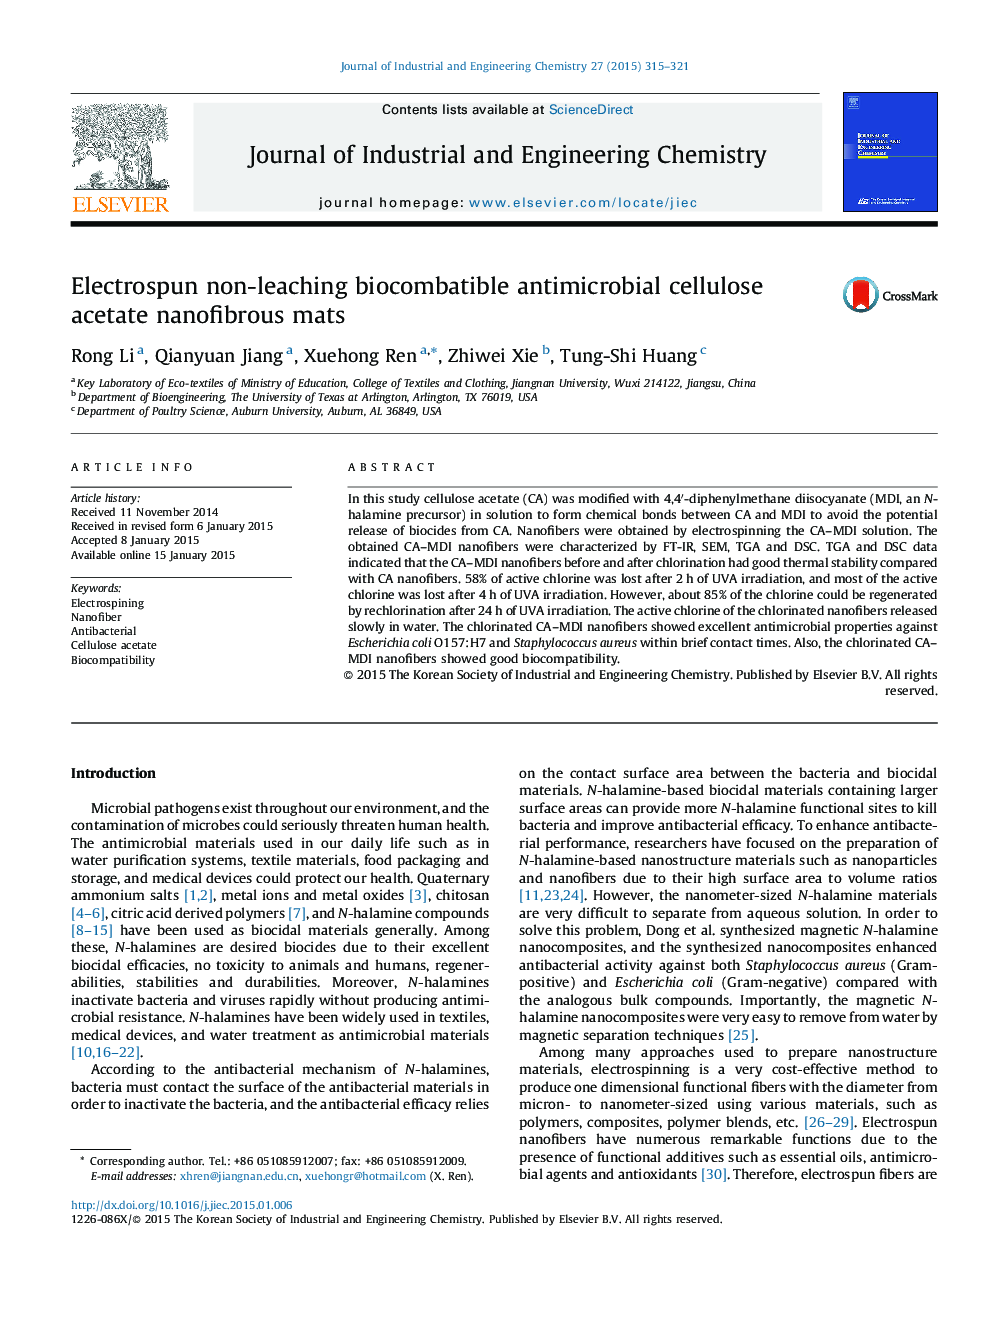 Electrospun non-leaching biocombatible antimicrobial cellulose acetate nanofibrous mats